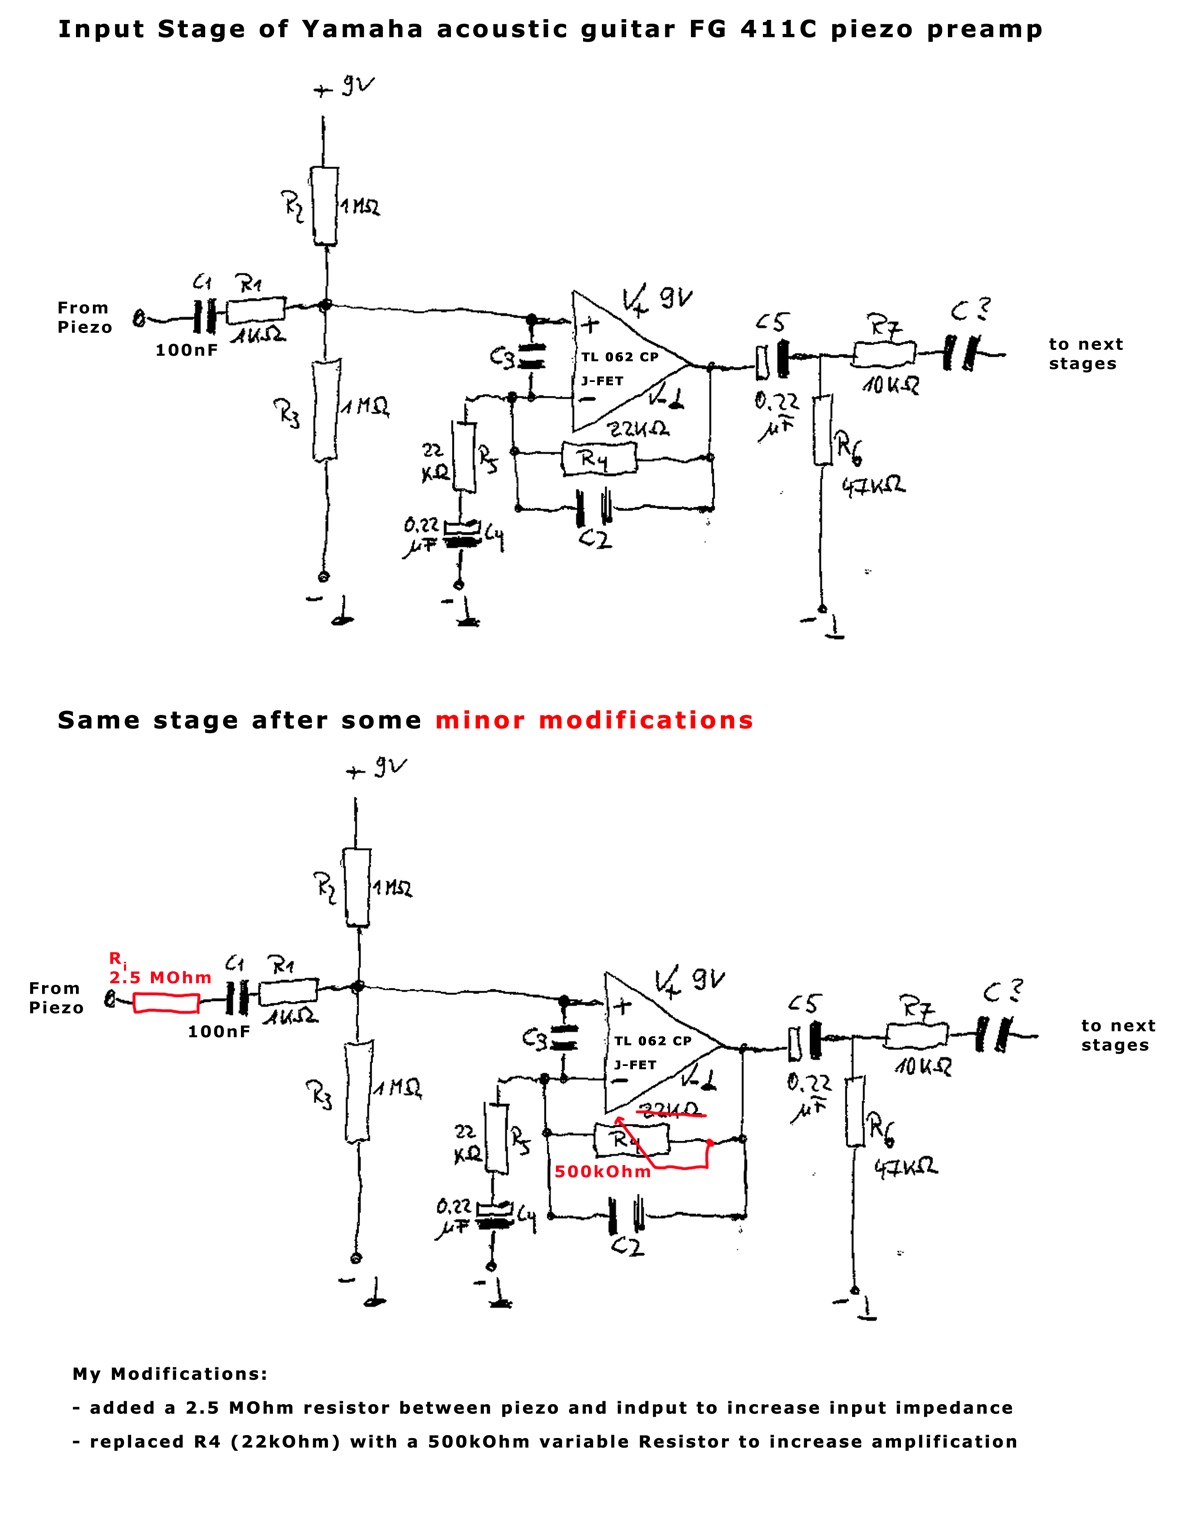 circuit-diagram-piezo-preamp-yamaha-fg.png